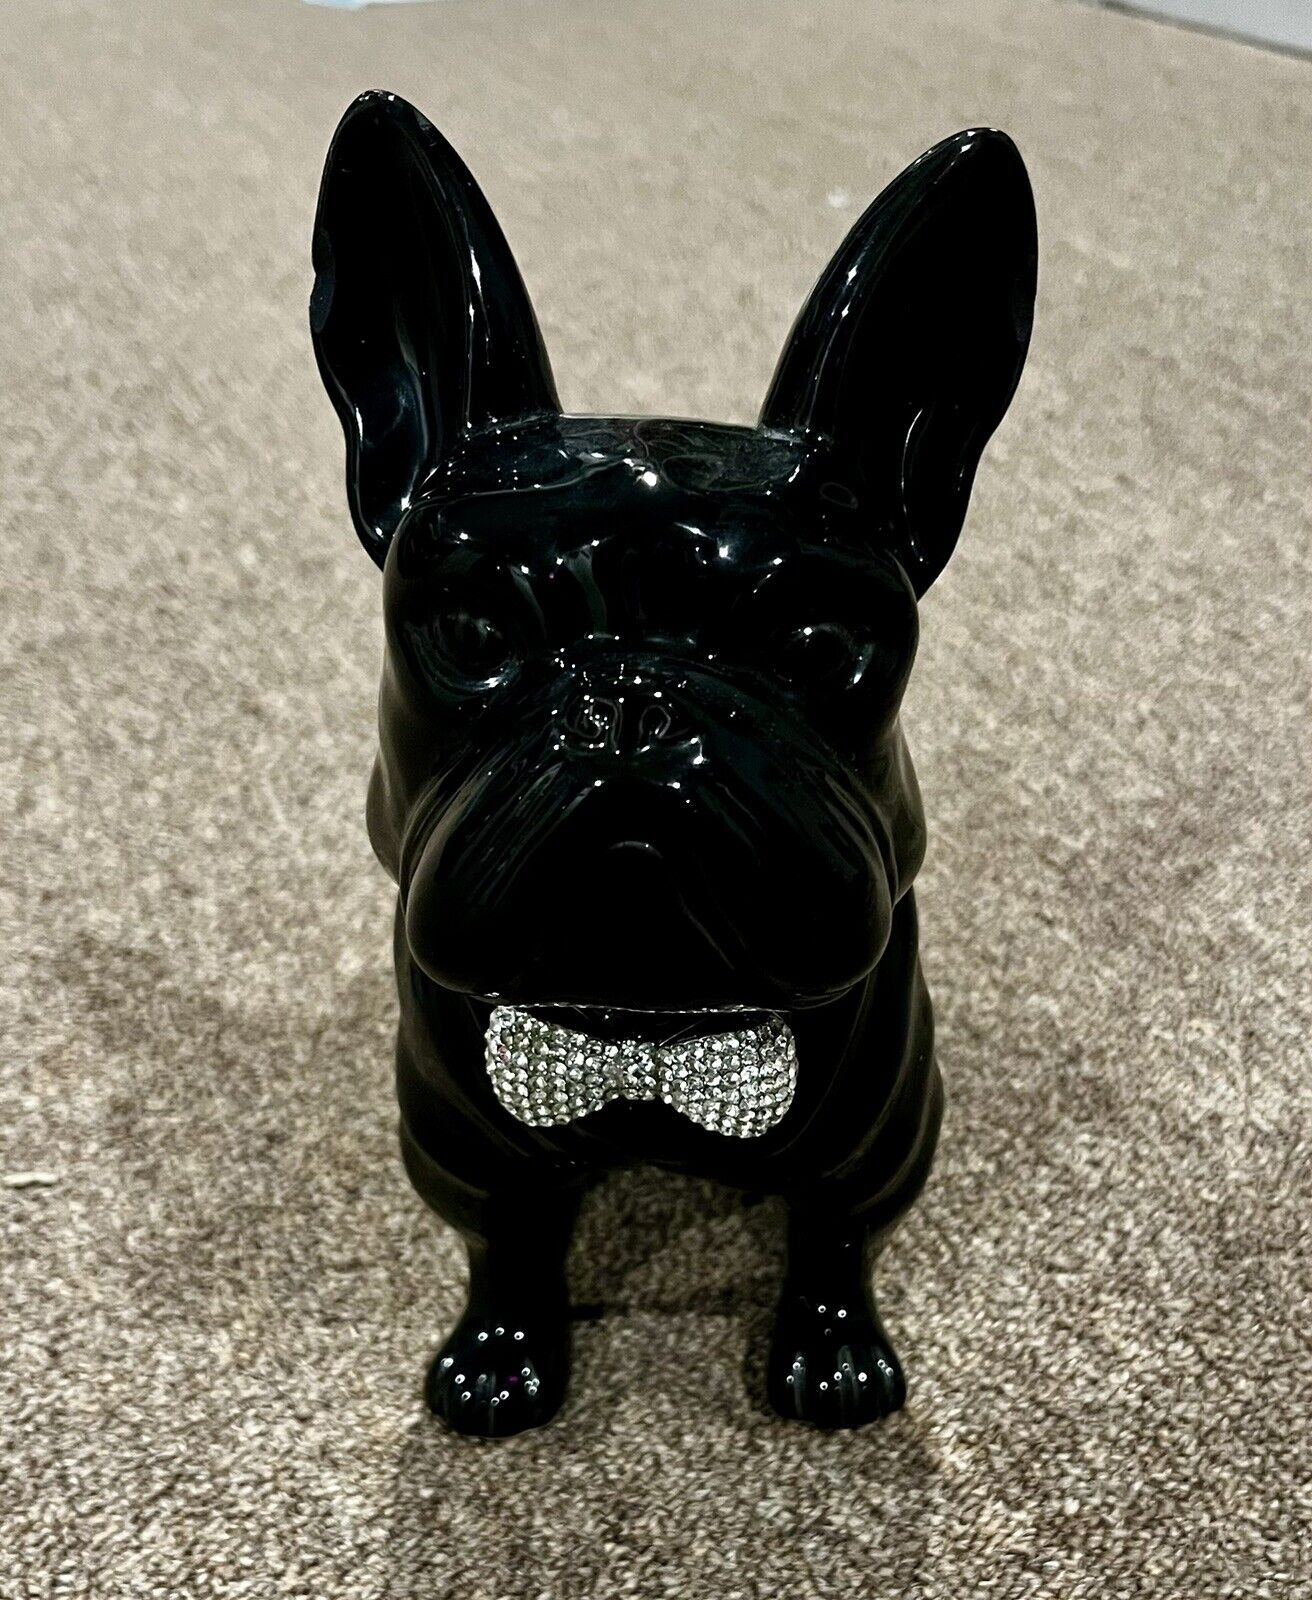 French Bulldog Figurine Statue in Black Porcelain - Large Rhinestone Bow